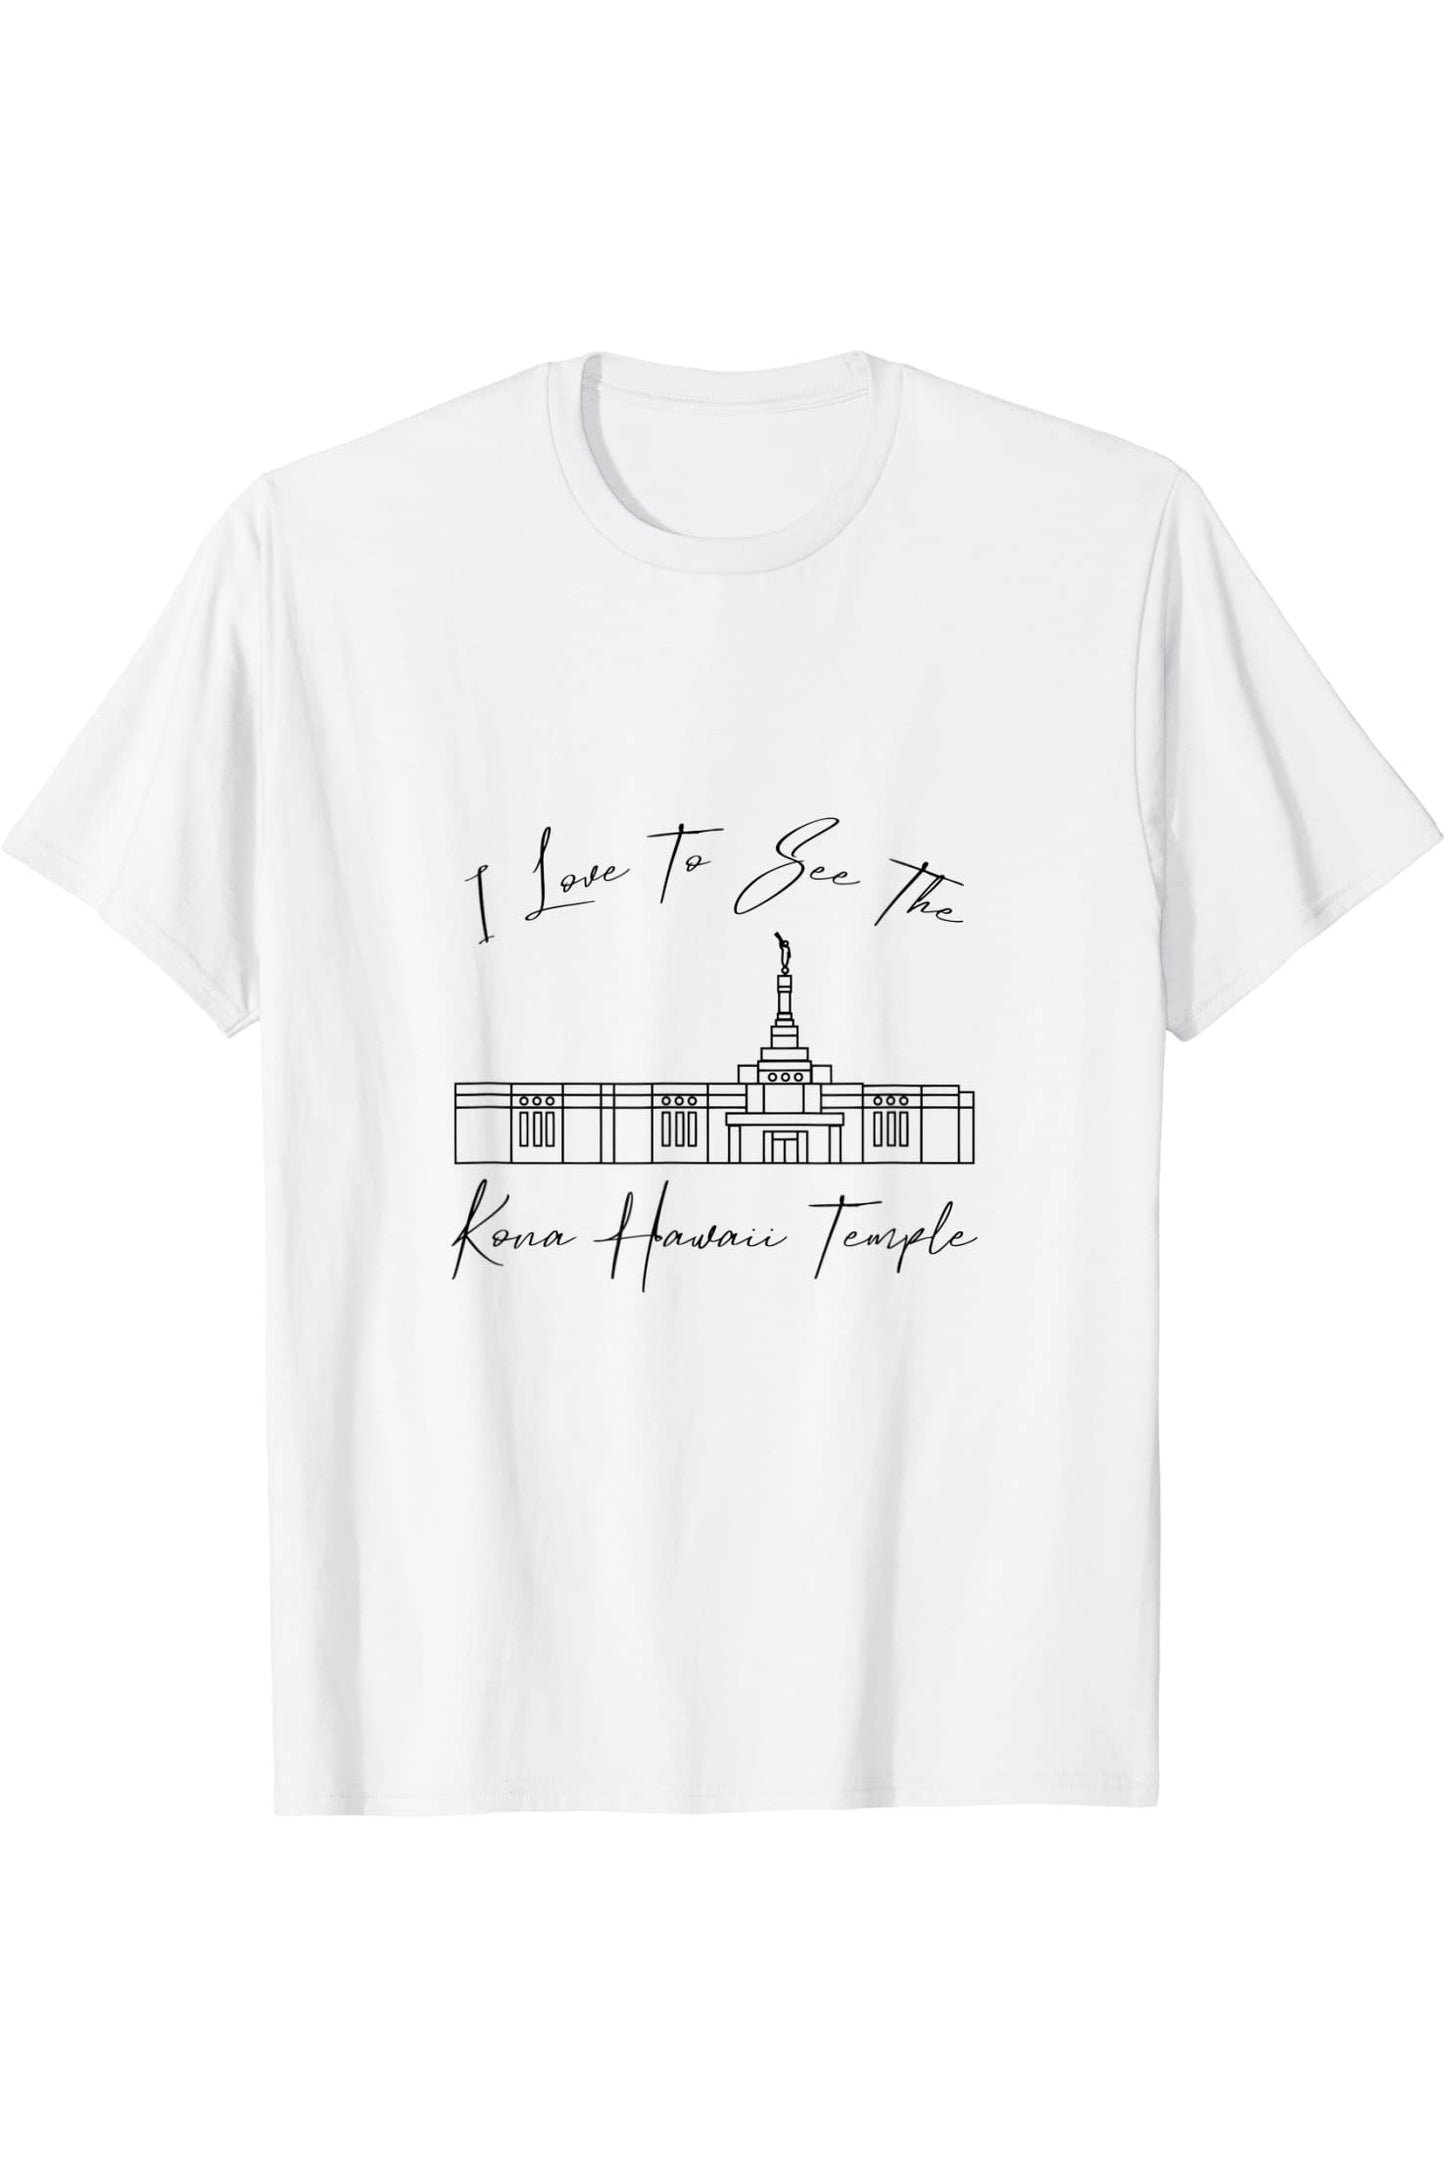 Kona Hawaii Temple T-Shirt - Calligraphy Style (English) US